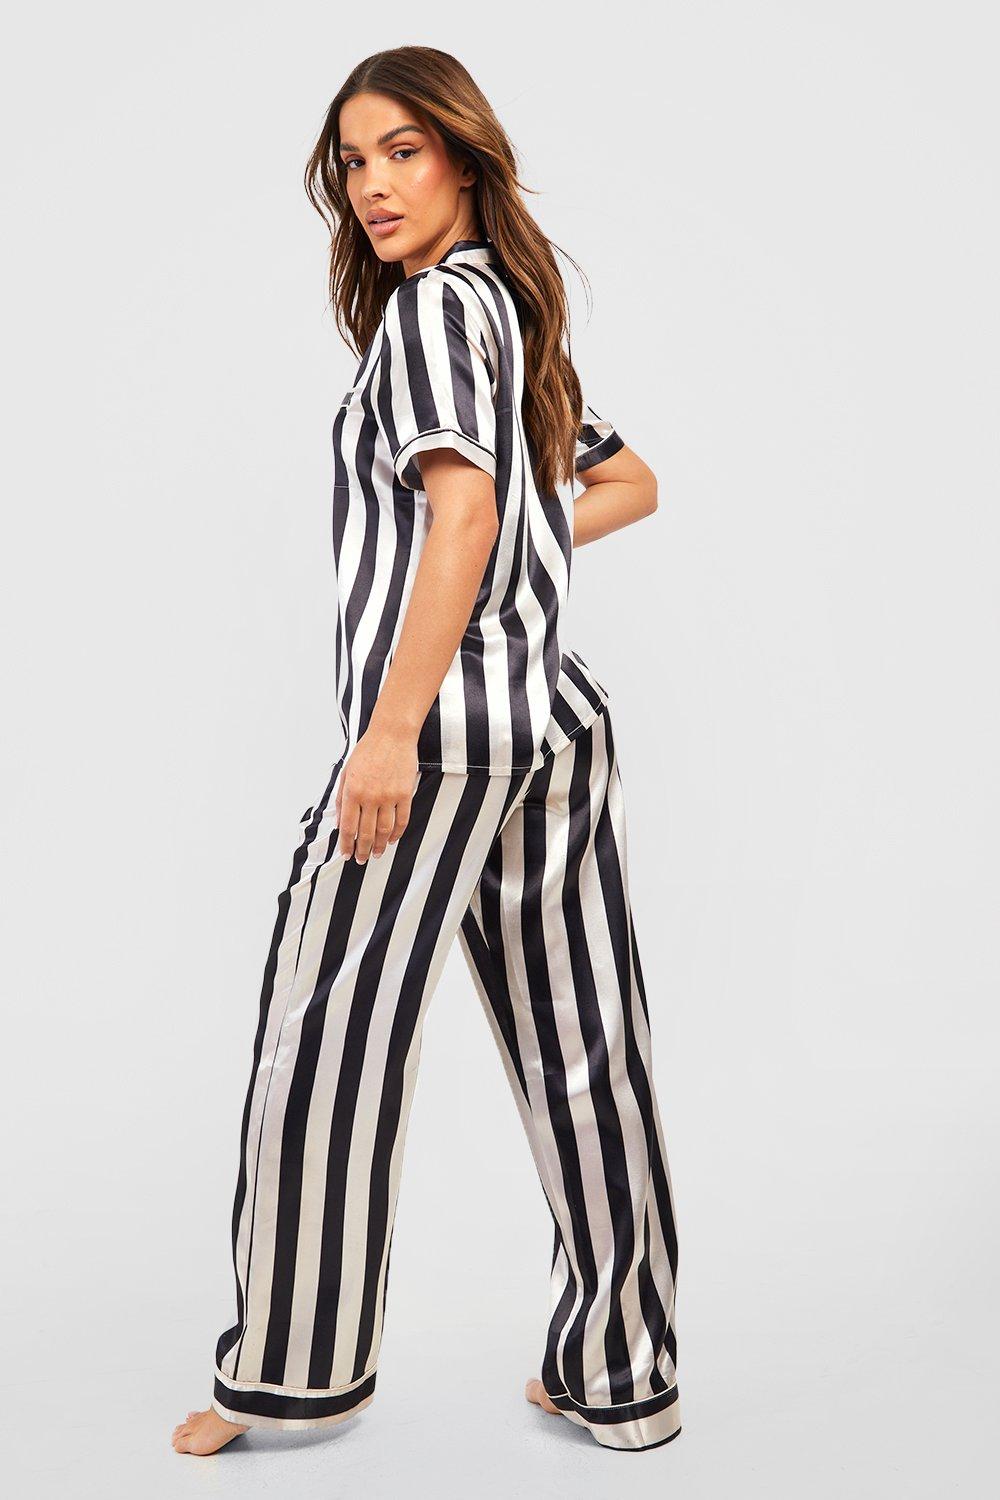 Satin Pajama Shirt and Pants - Cream/striped - Ladies